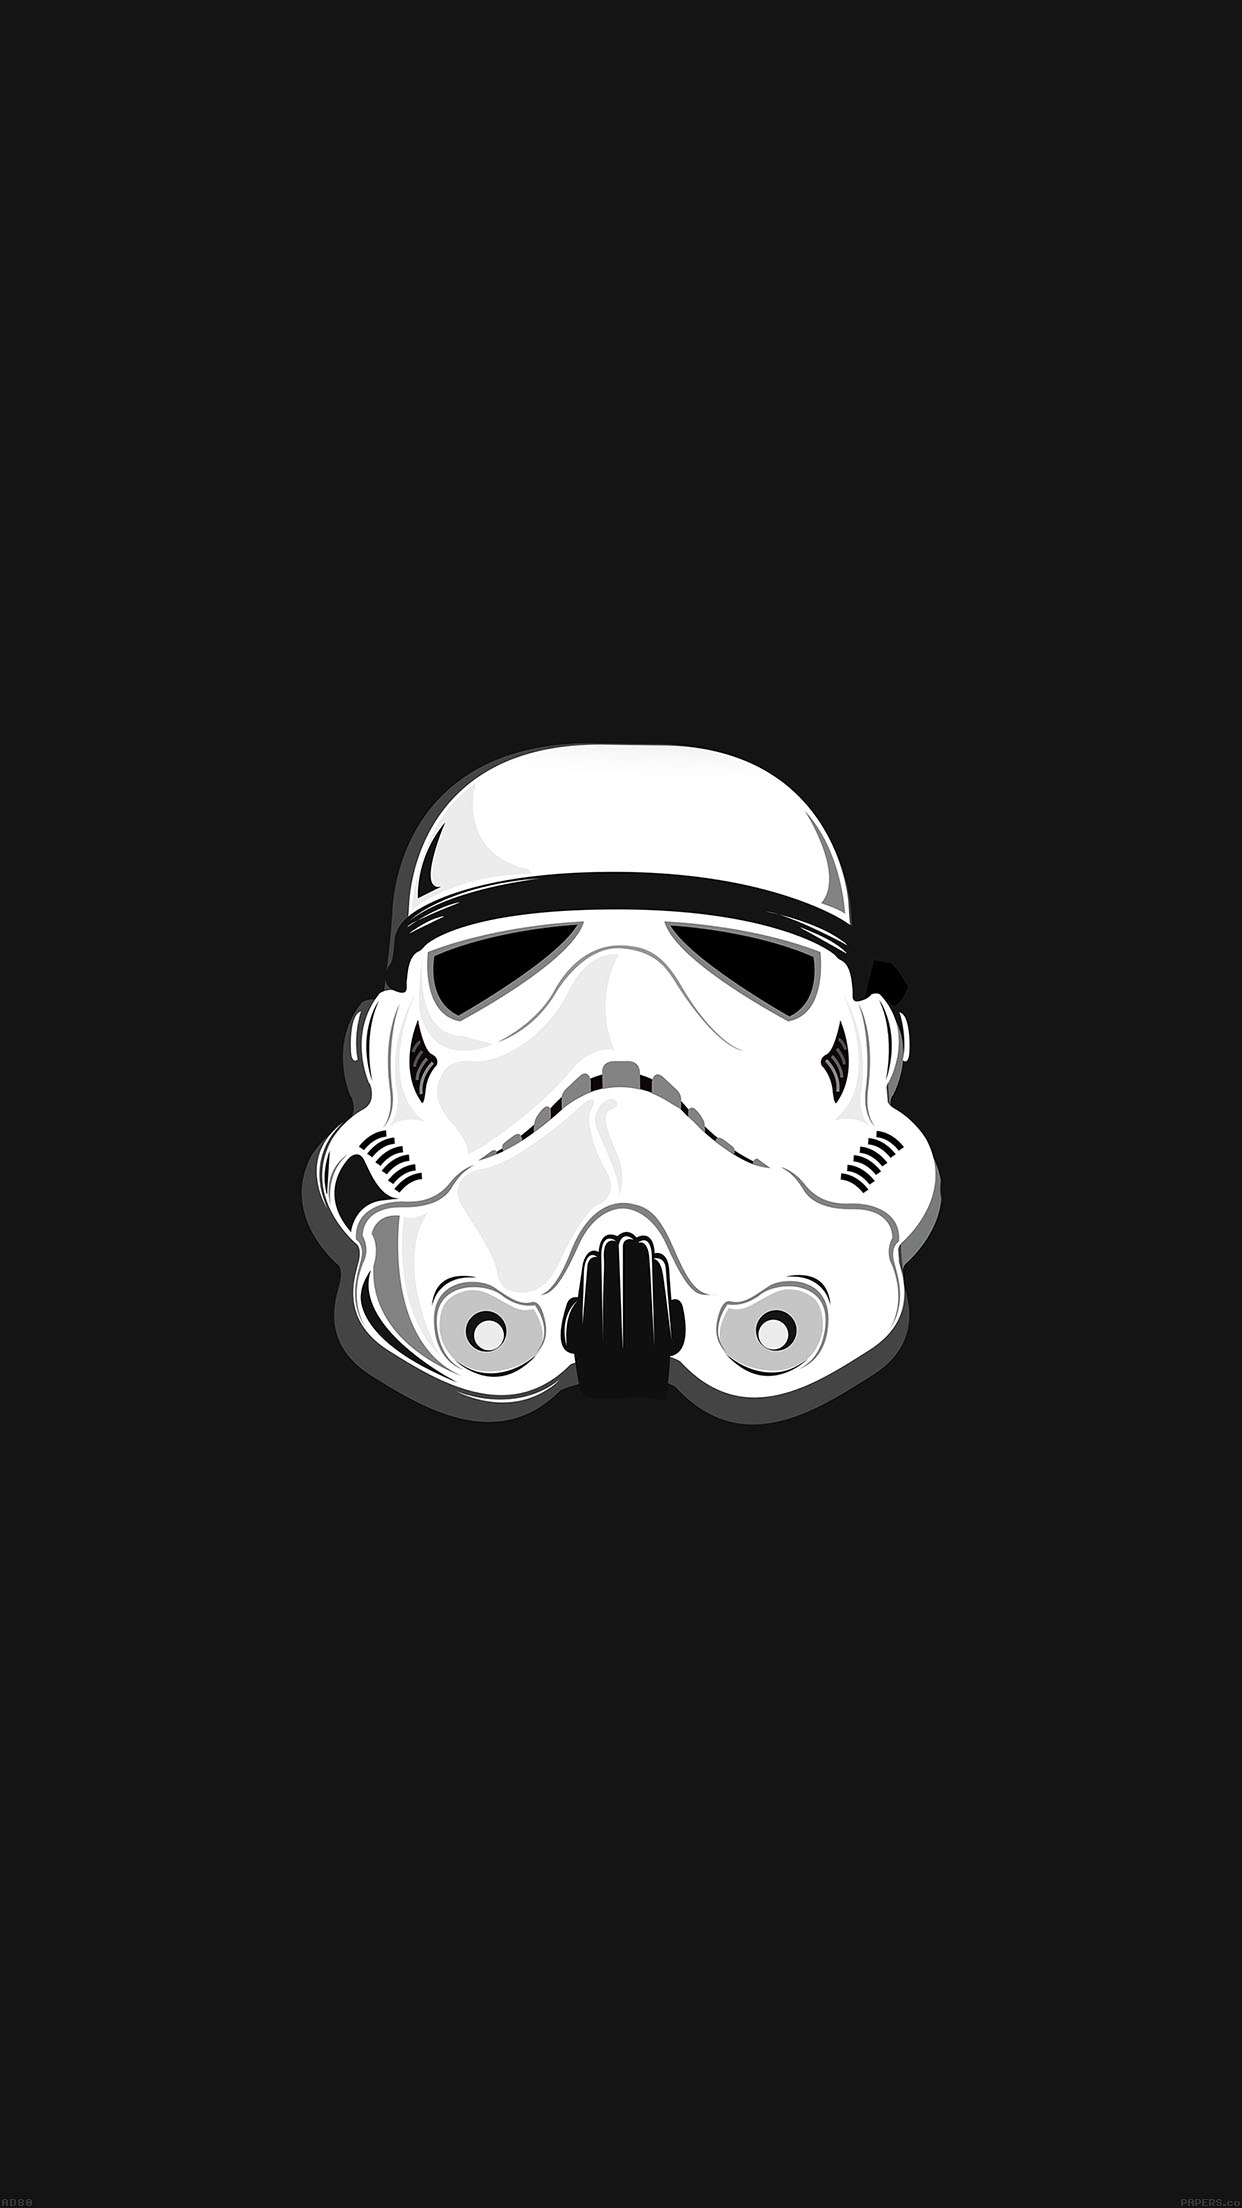 Storm Trooper Star Wars Illustration Android Wallpaper free download